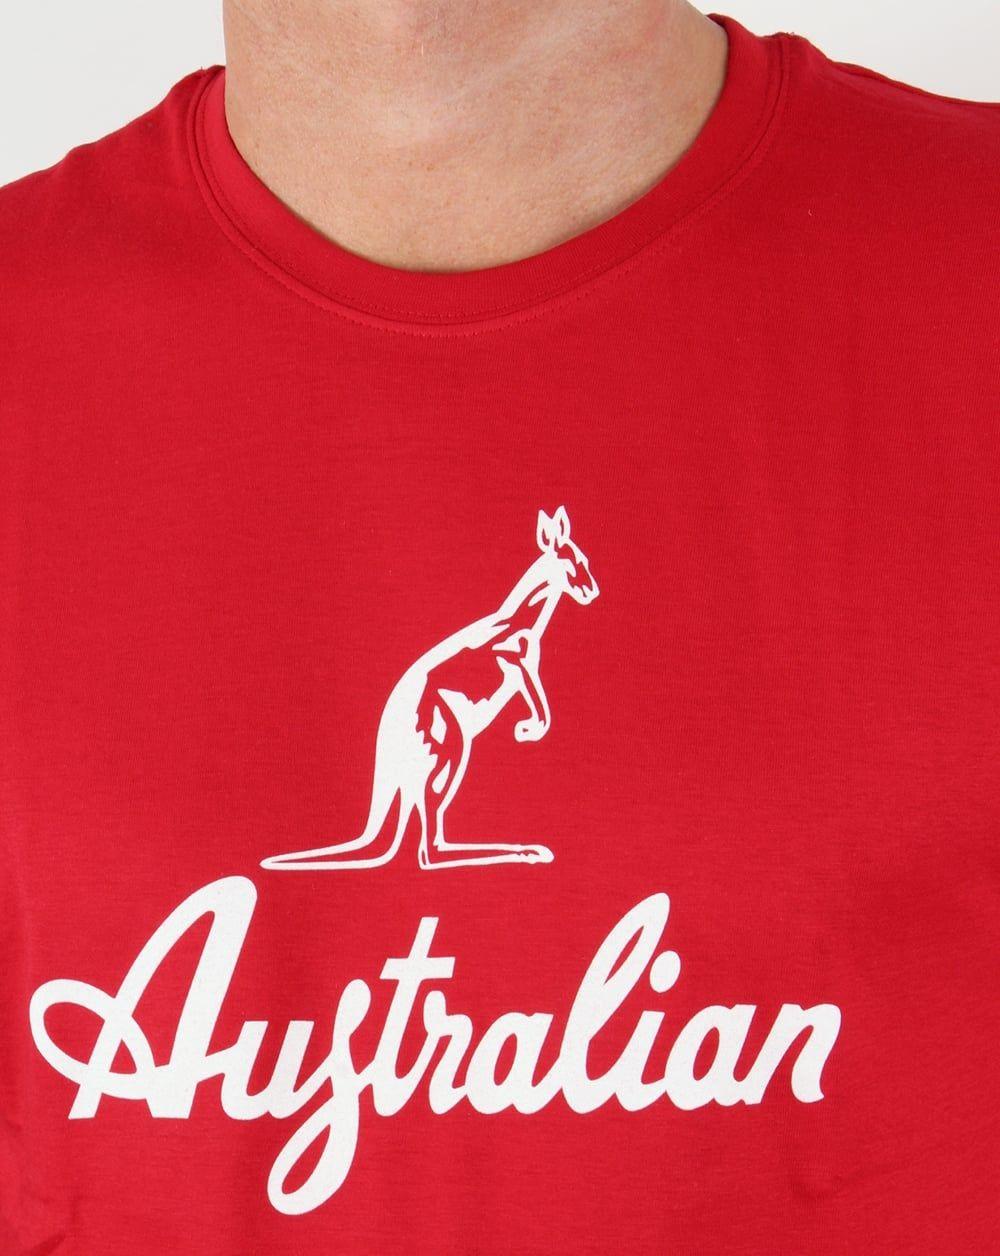 Red and White Clothing Logo - australian logo carrier tee